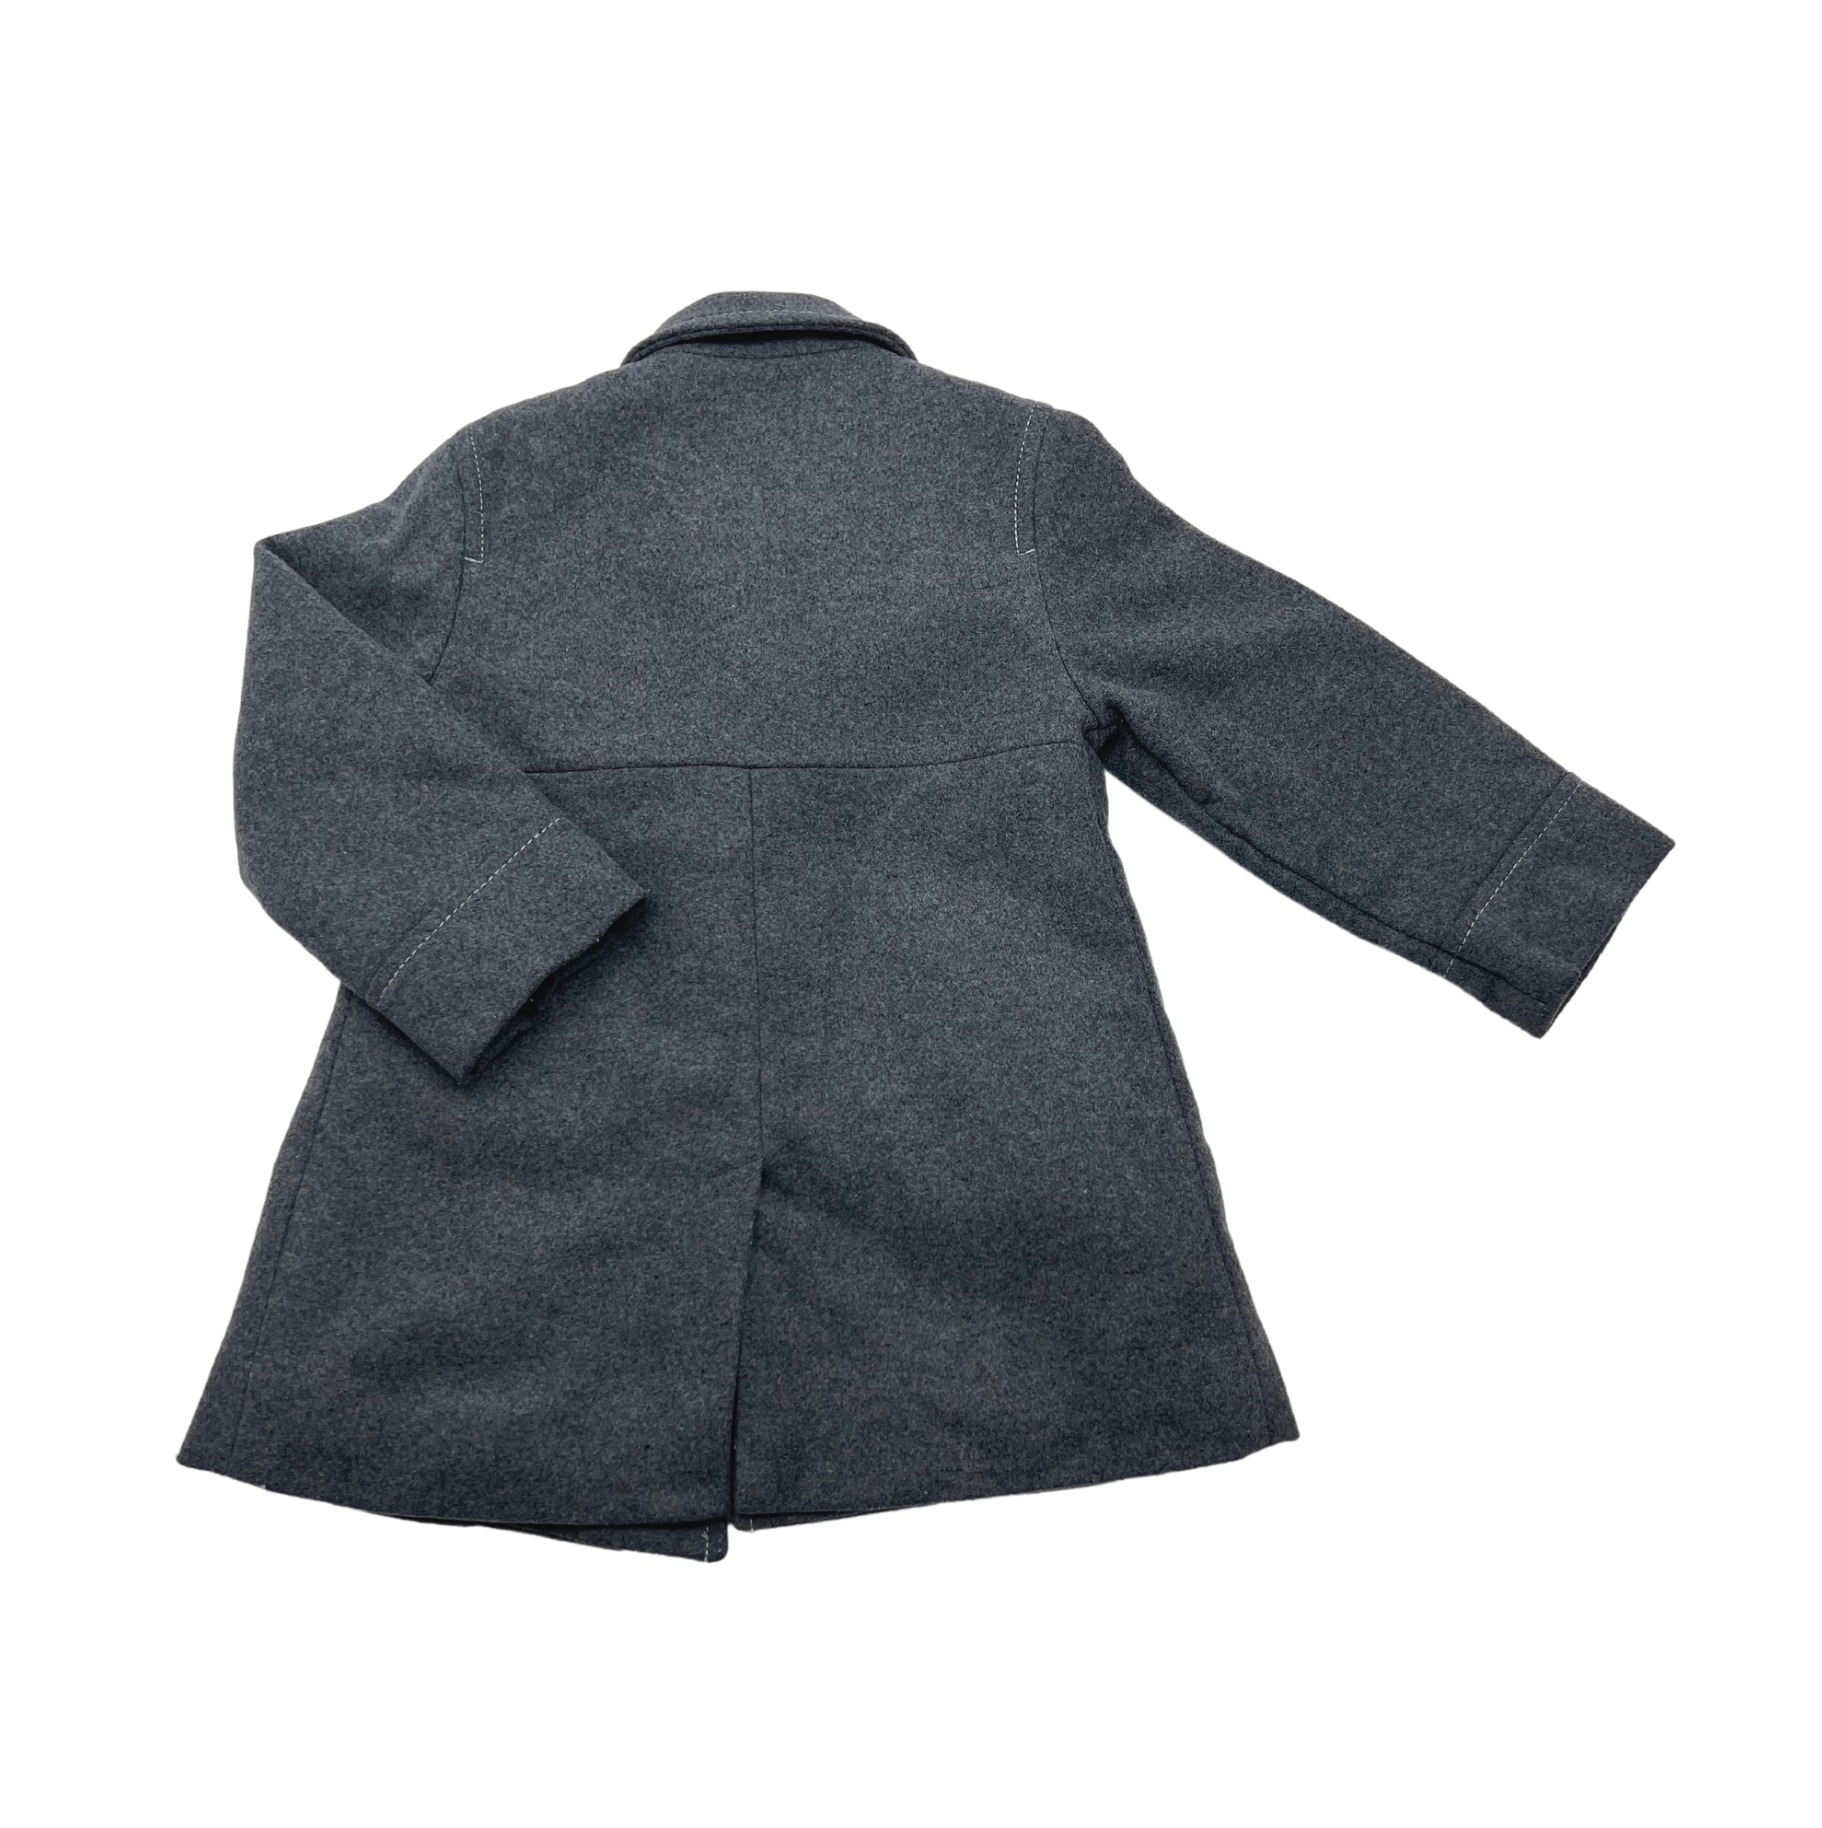 PETIT BATEAU - Wool coat - 4 years old